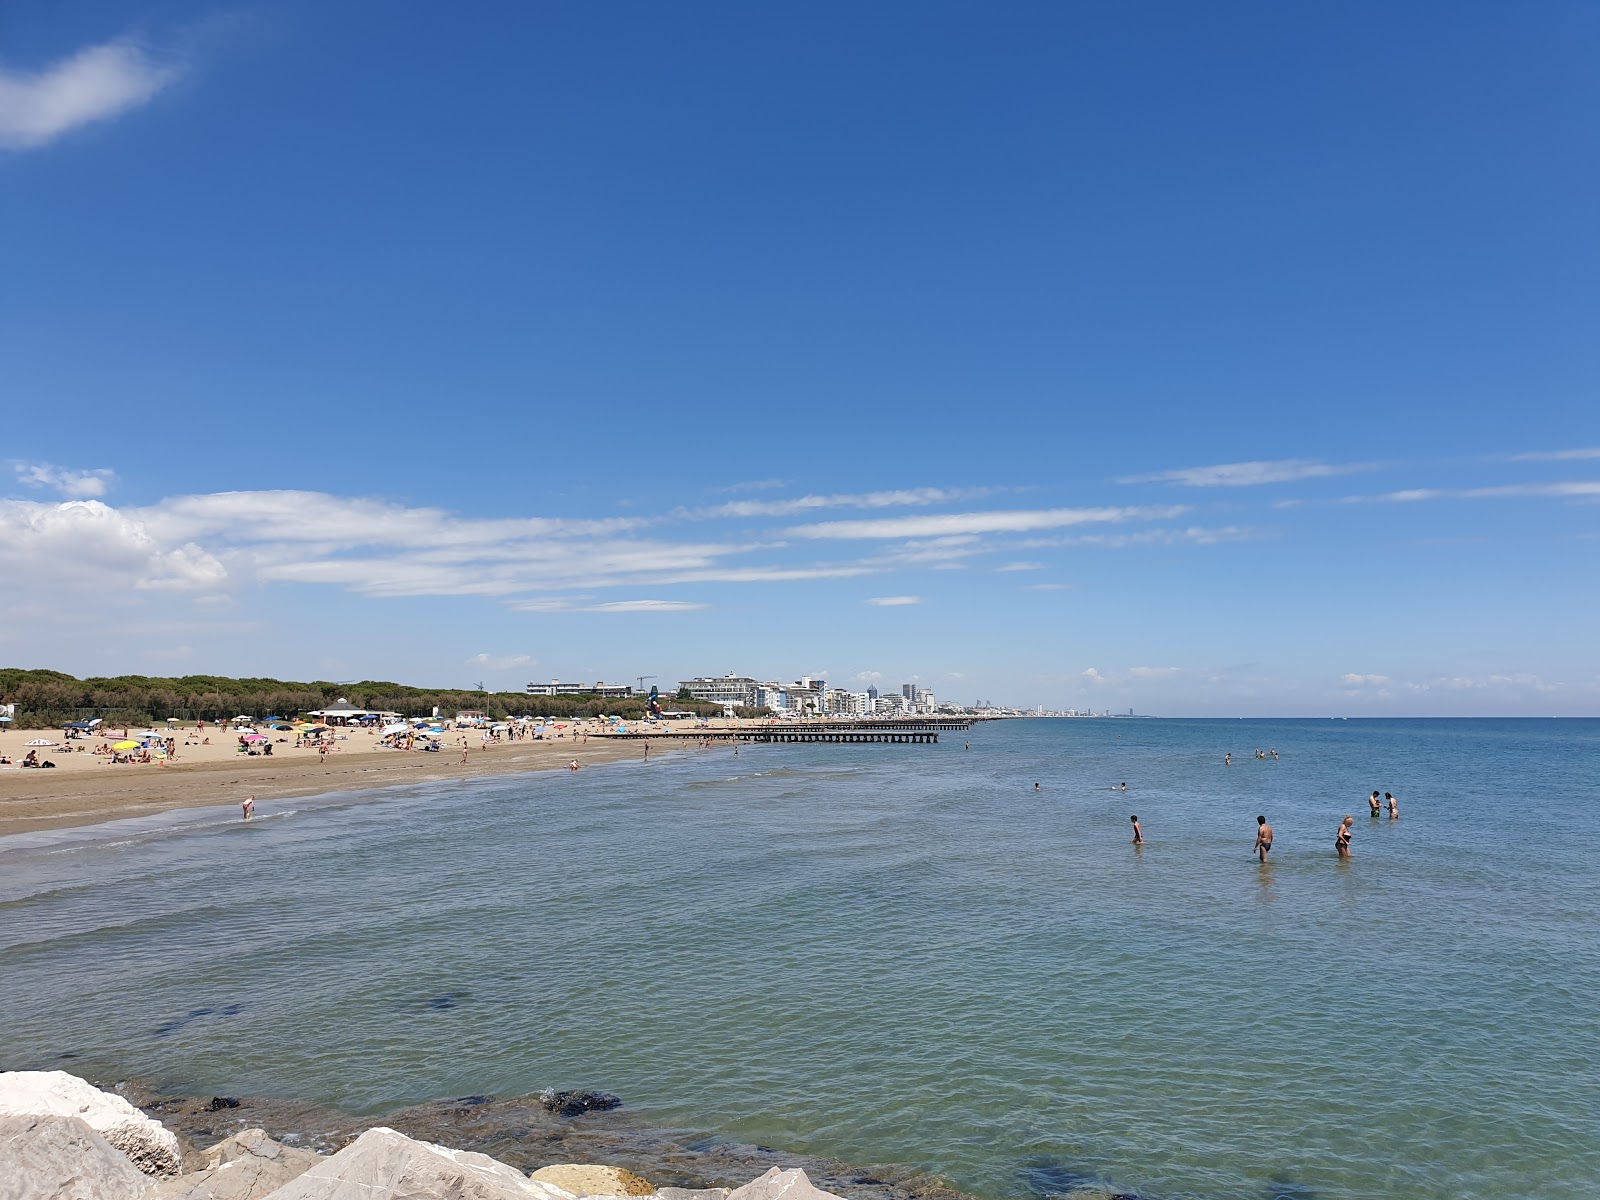 Foto av Spiaggia del Faro med rymlig strand